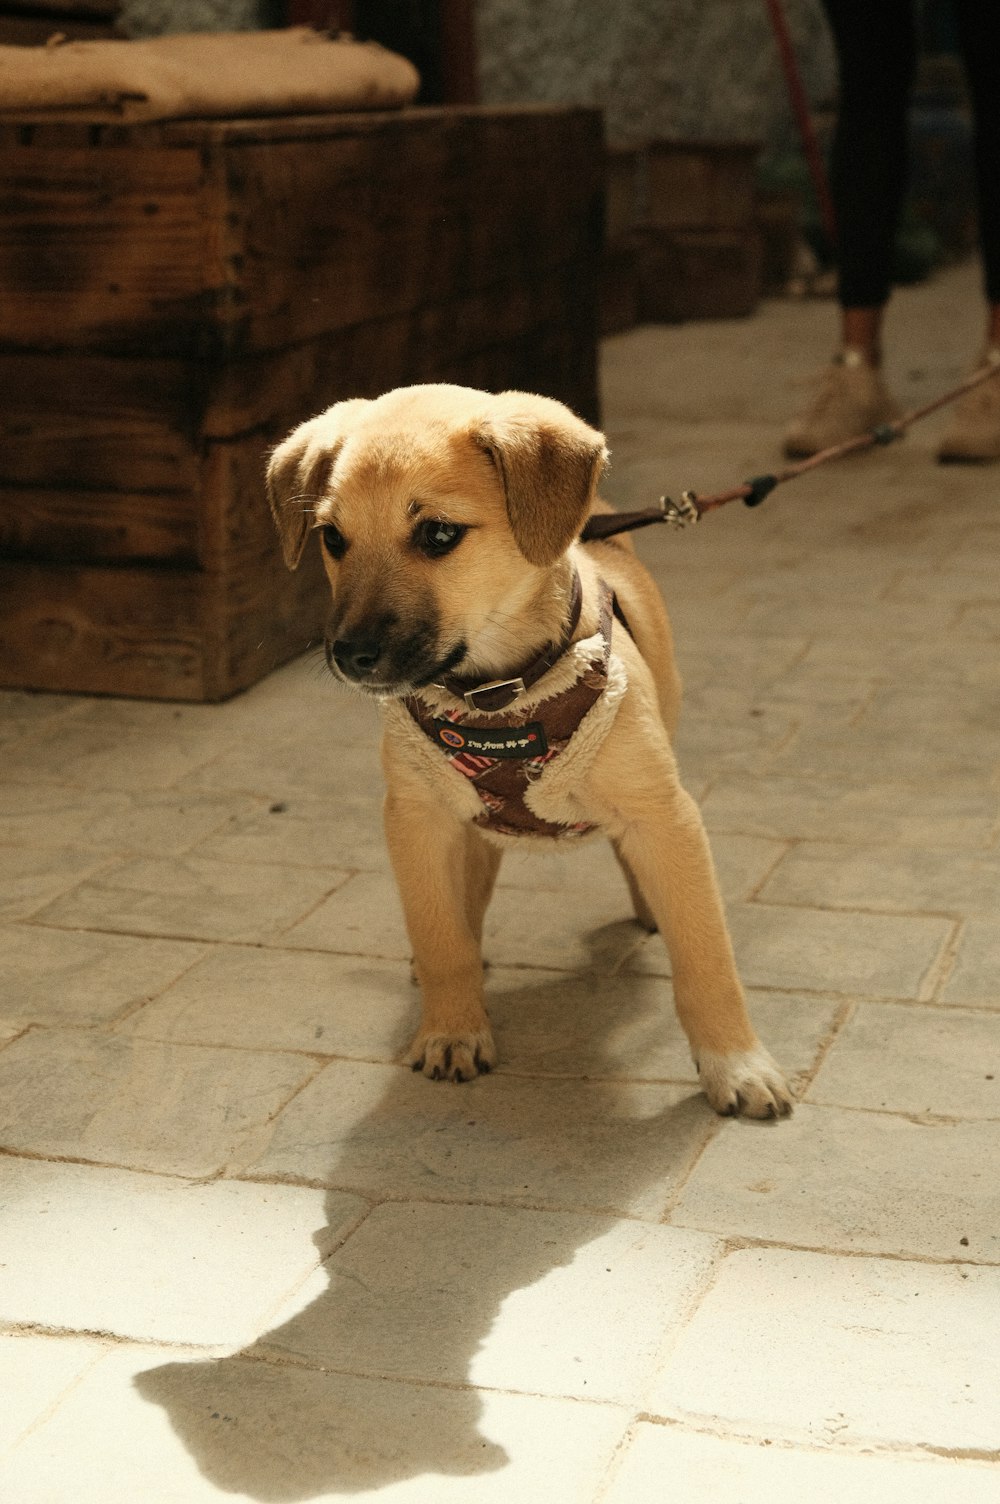 a small dog on a leash